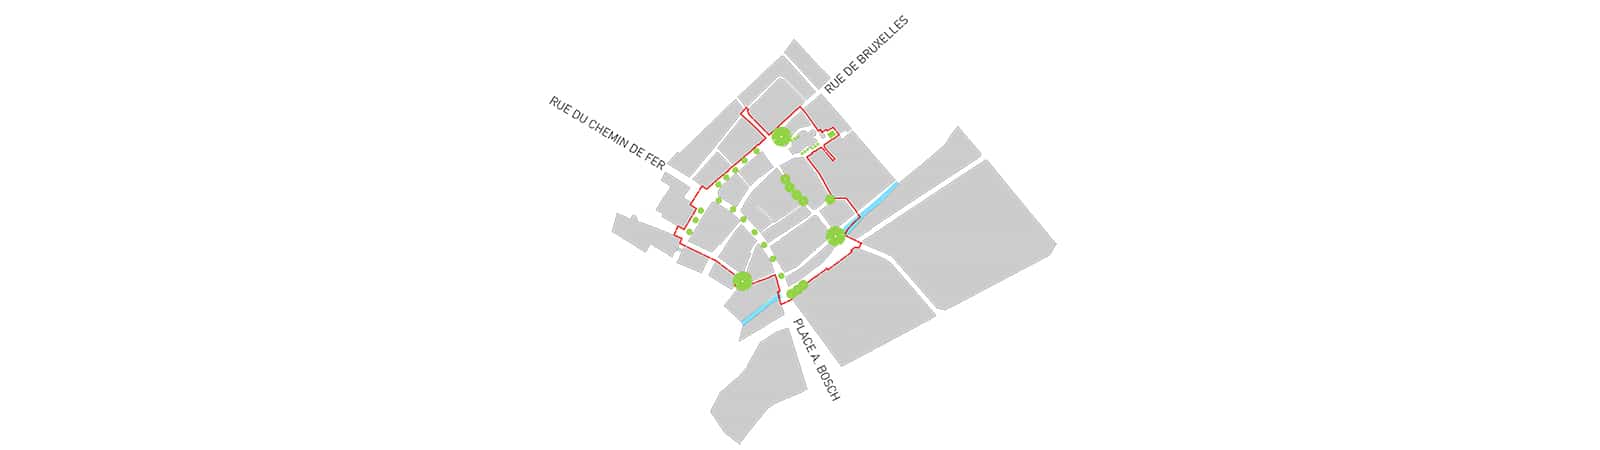 Schéma - Zones vertes - Embellissement du centre-ville